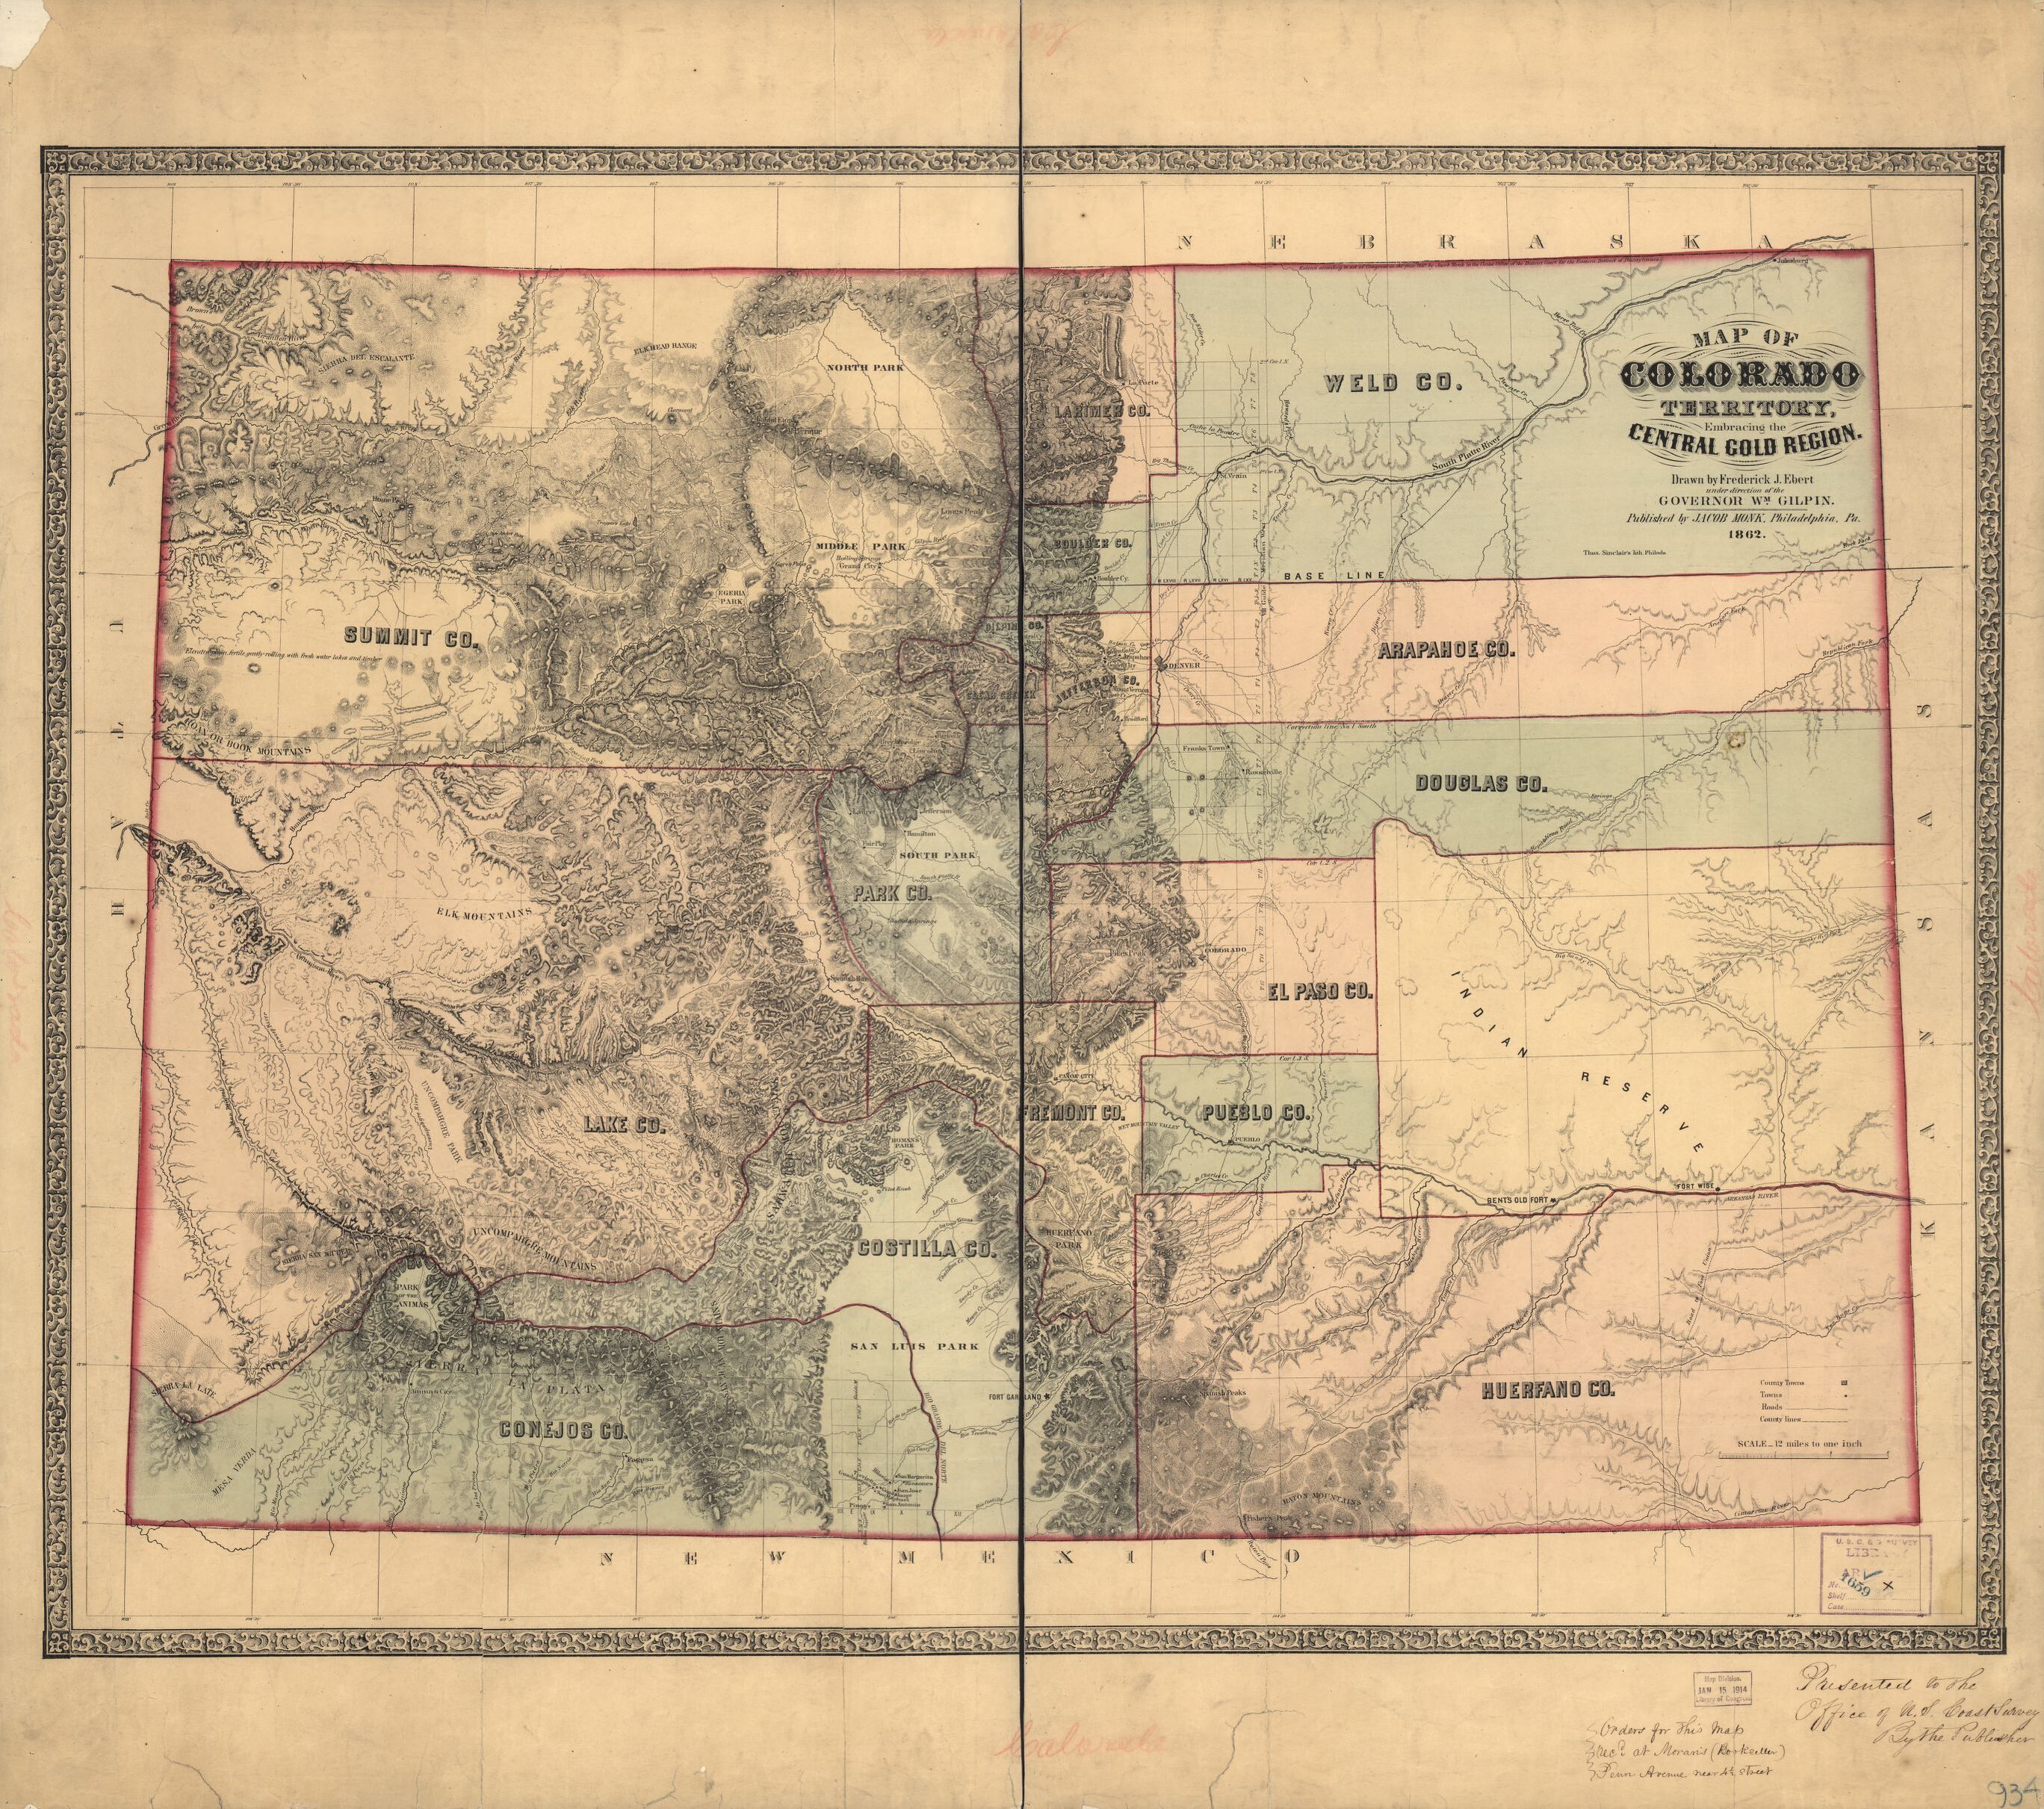 Map of Colorado Territory circa 1862